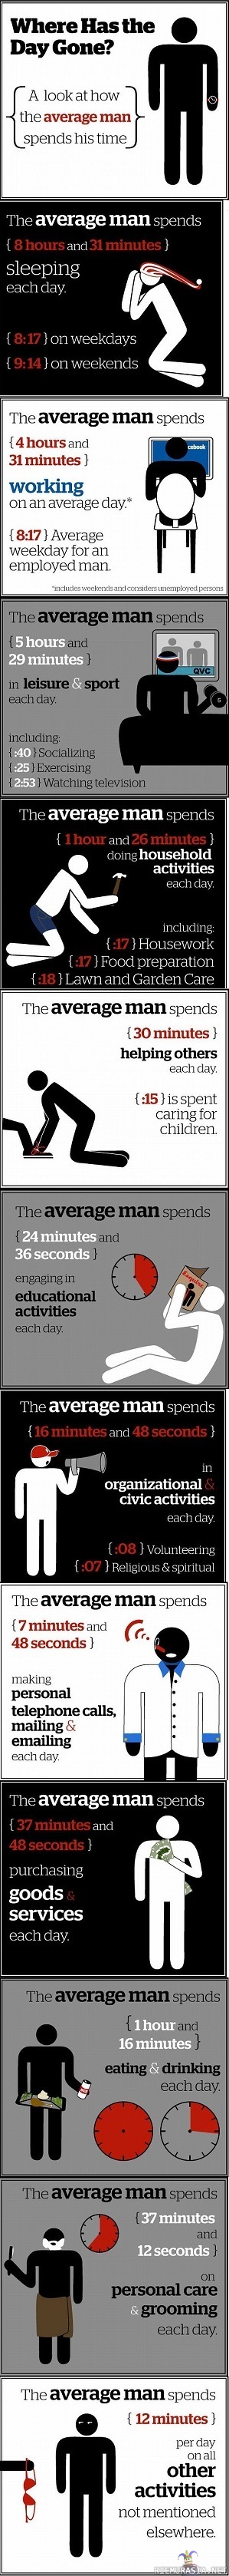 How the Average Man Spends His Day - lisää faktaa.